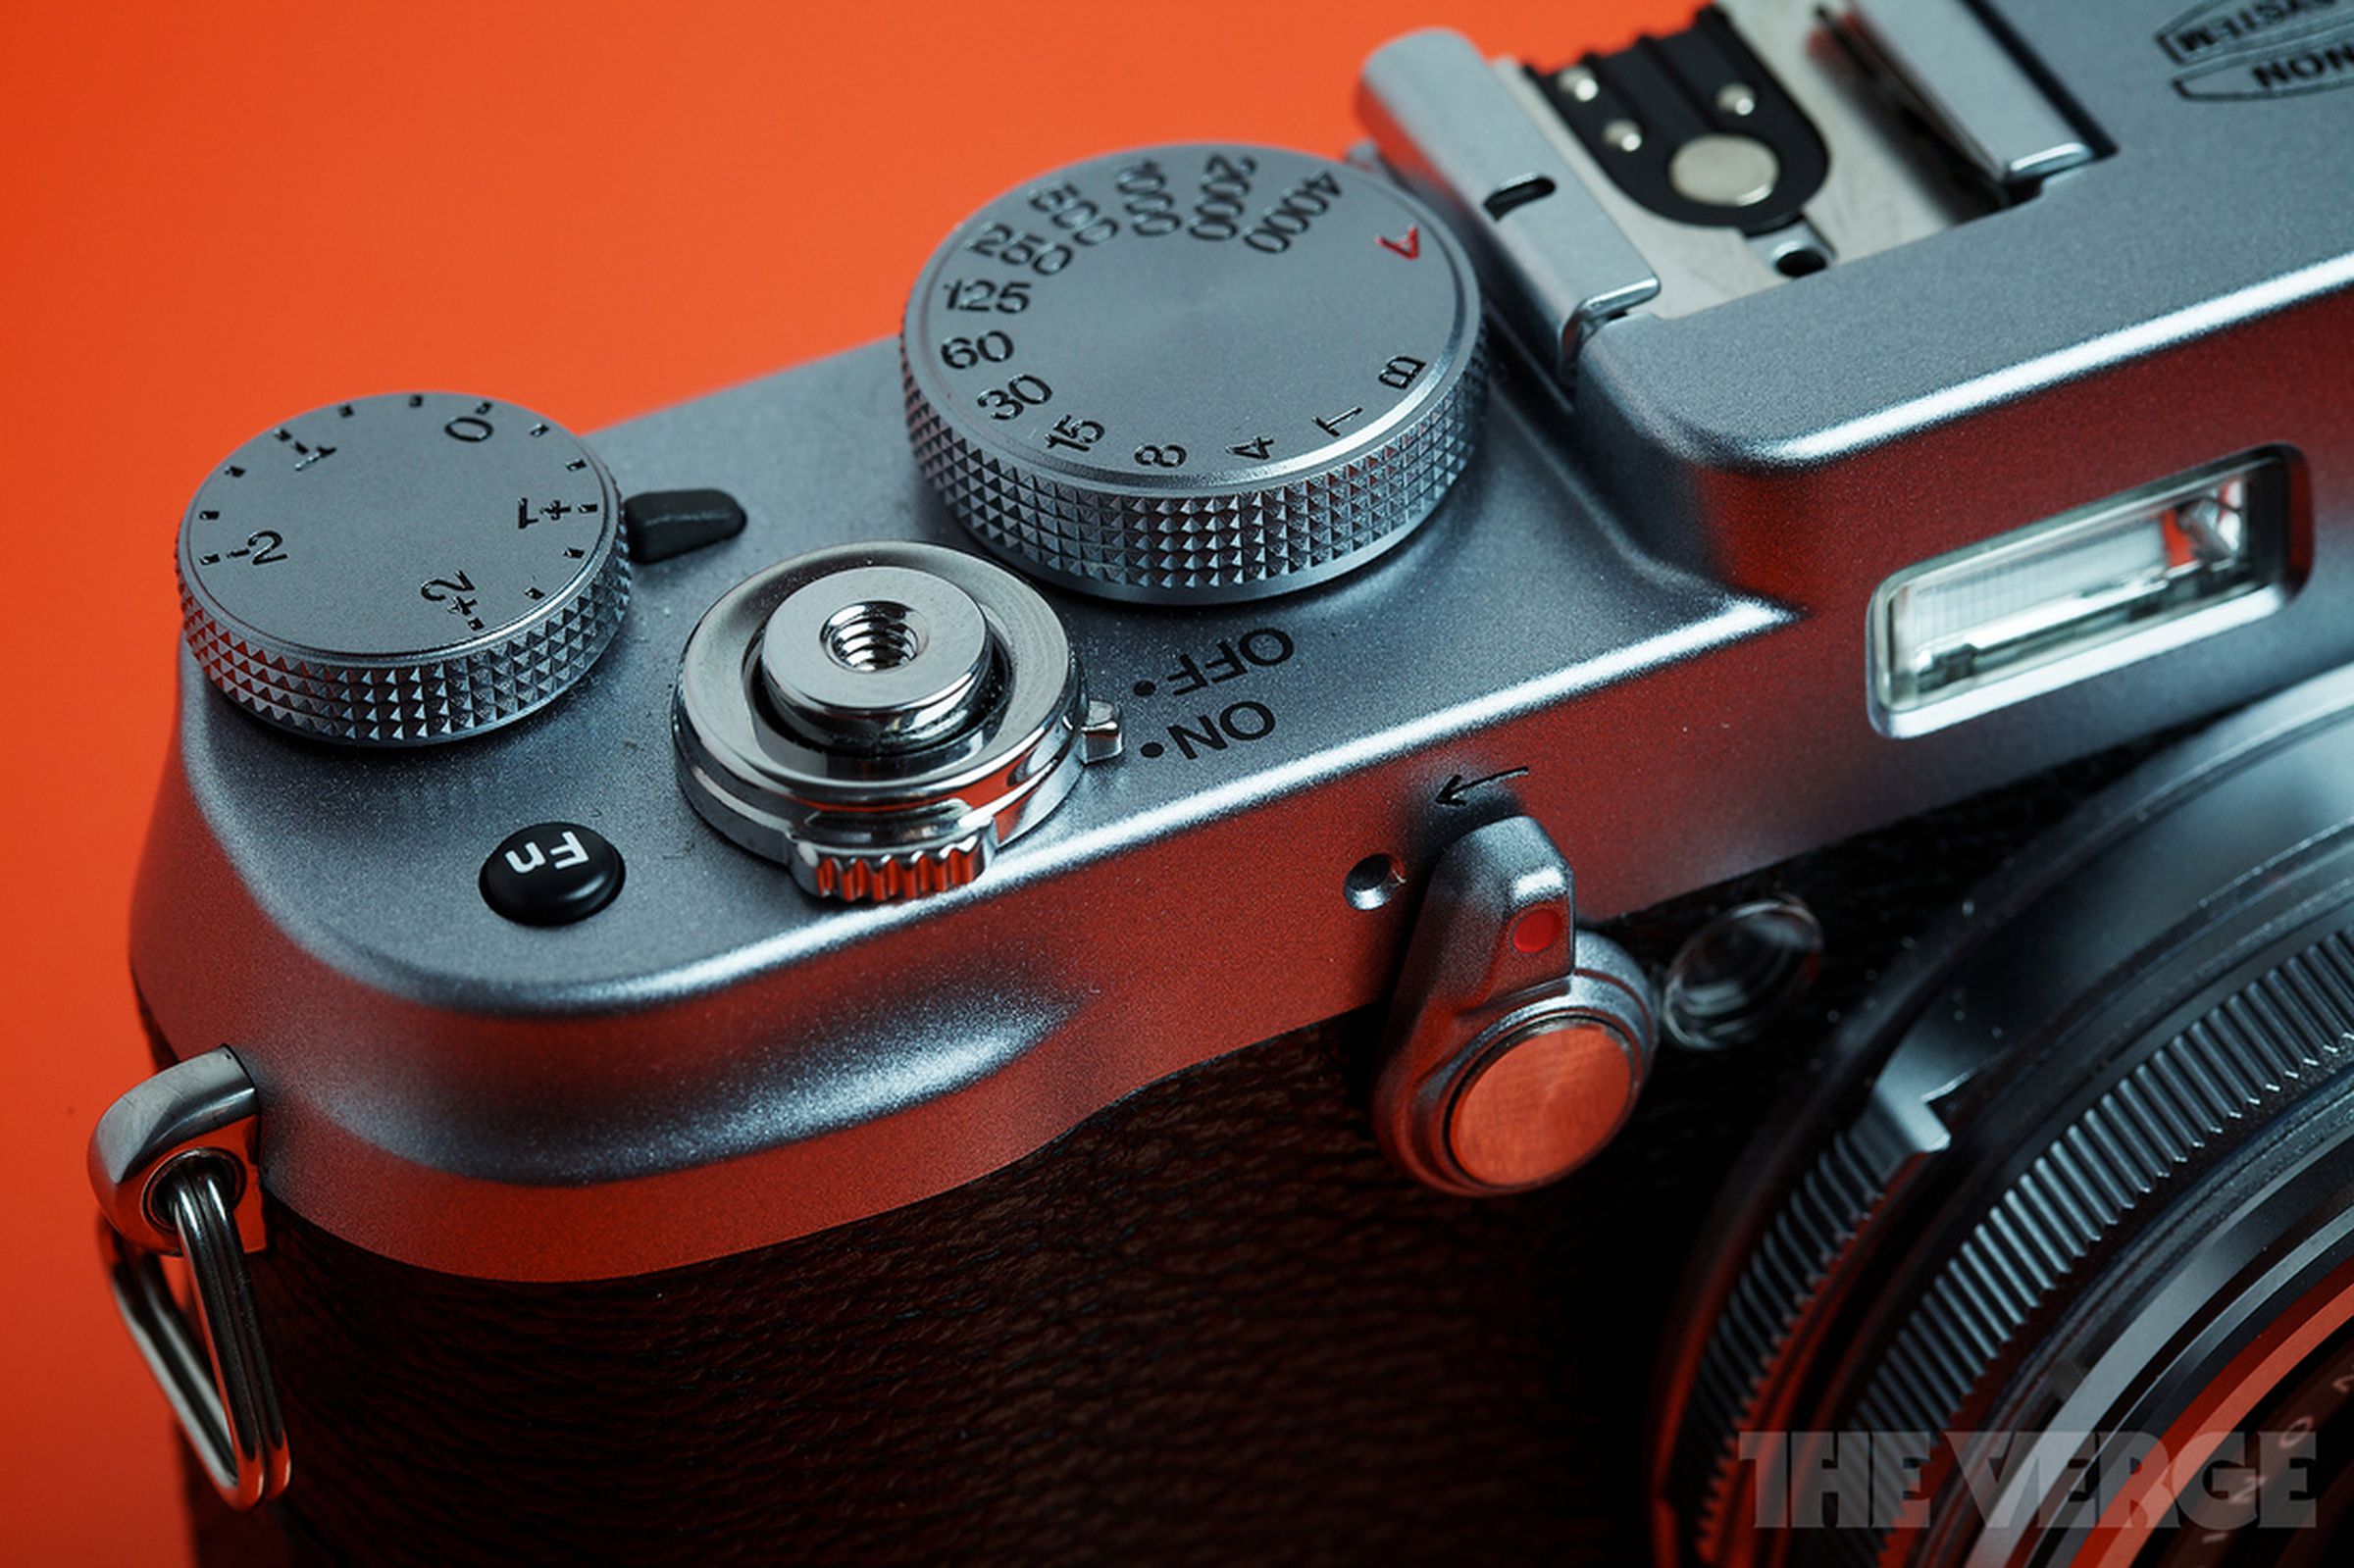 Fujifilm X100S review photos